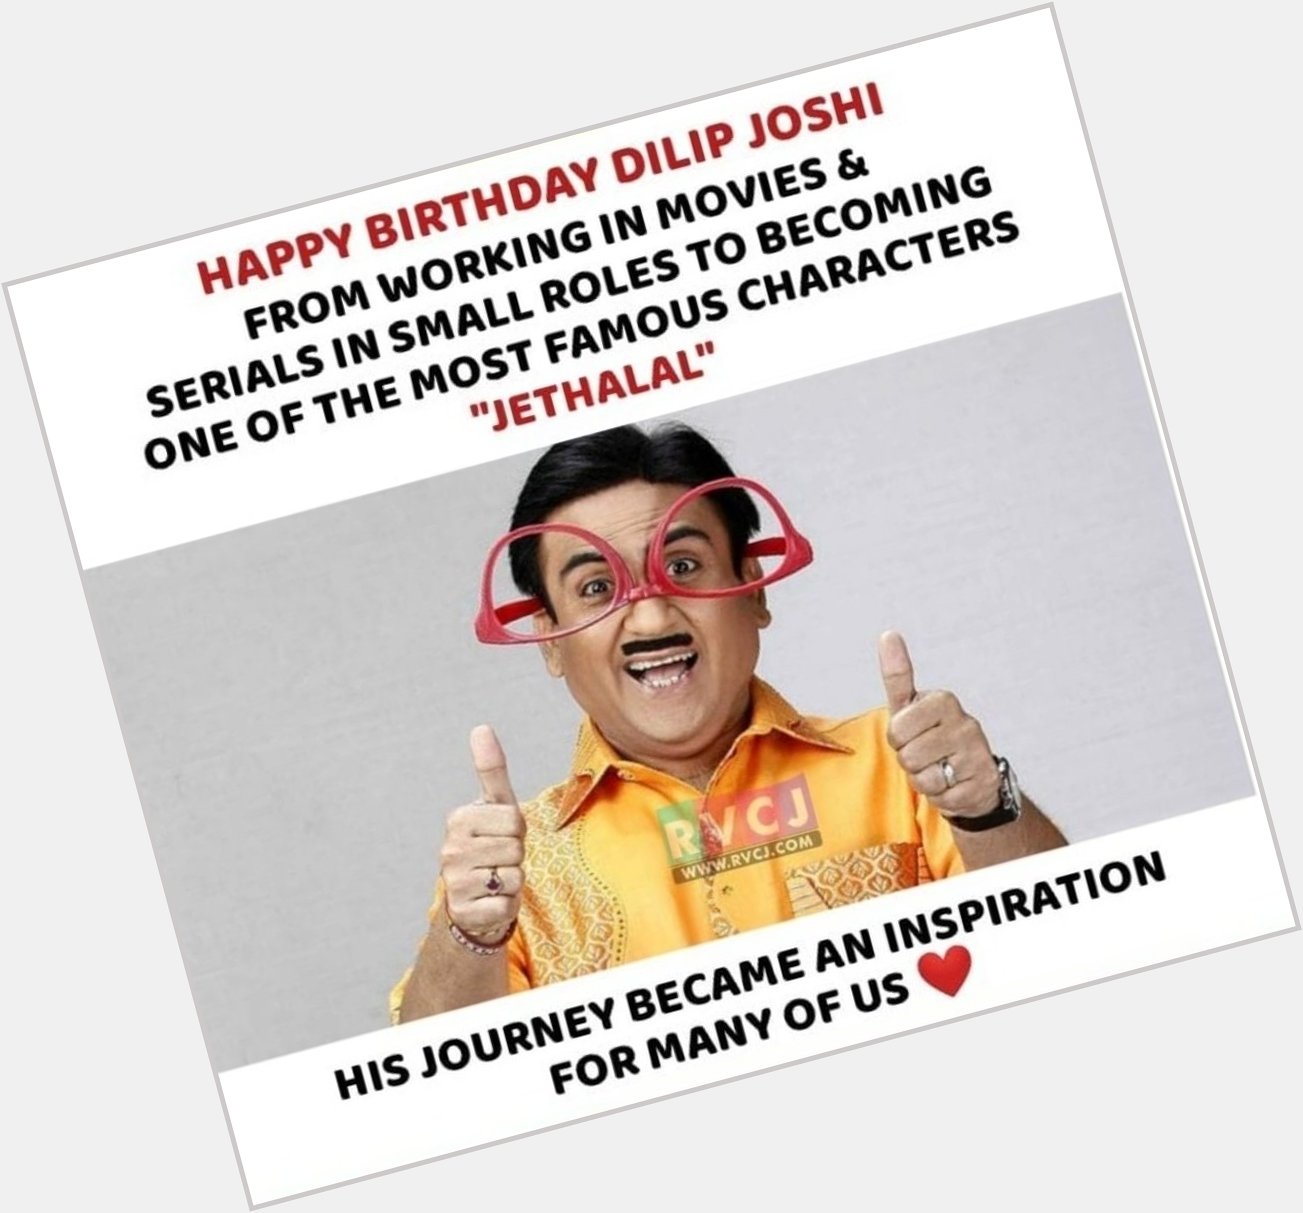 Happy birthday Dilip joshi       